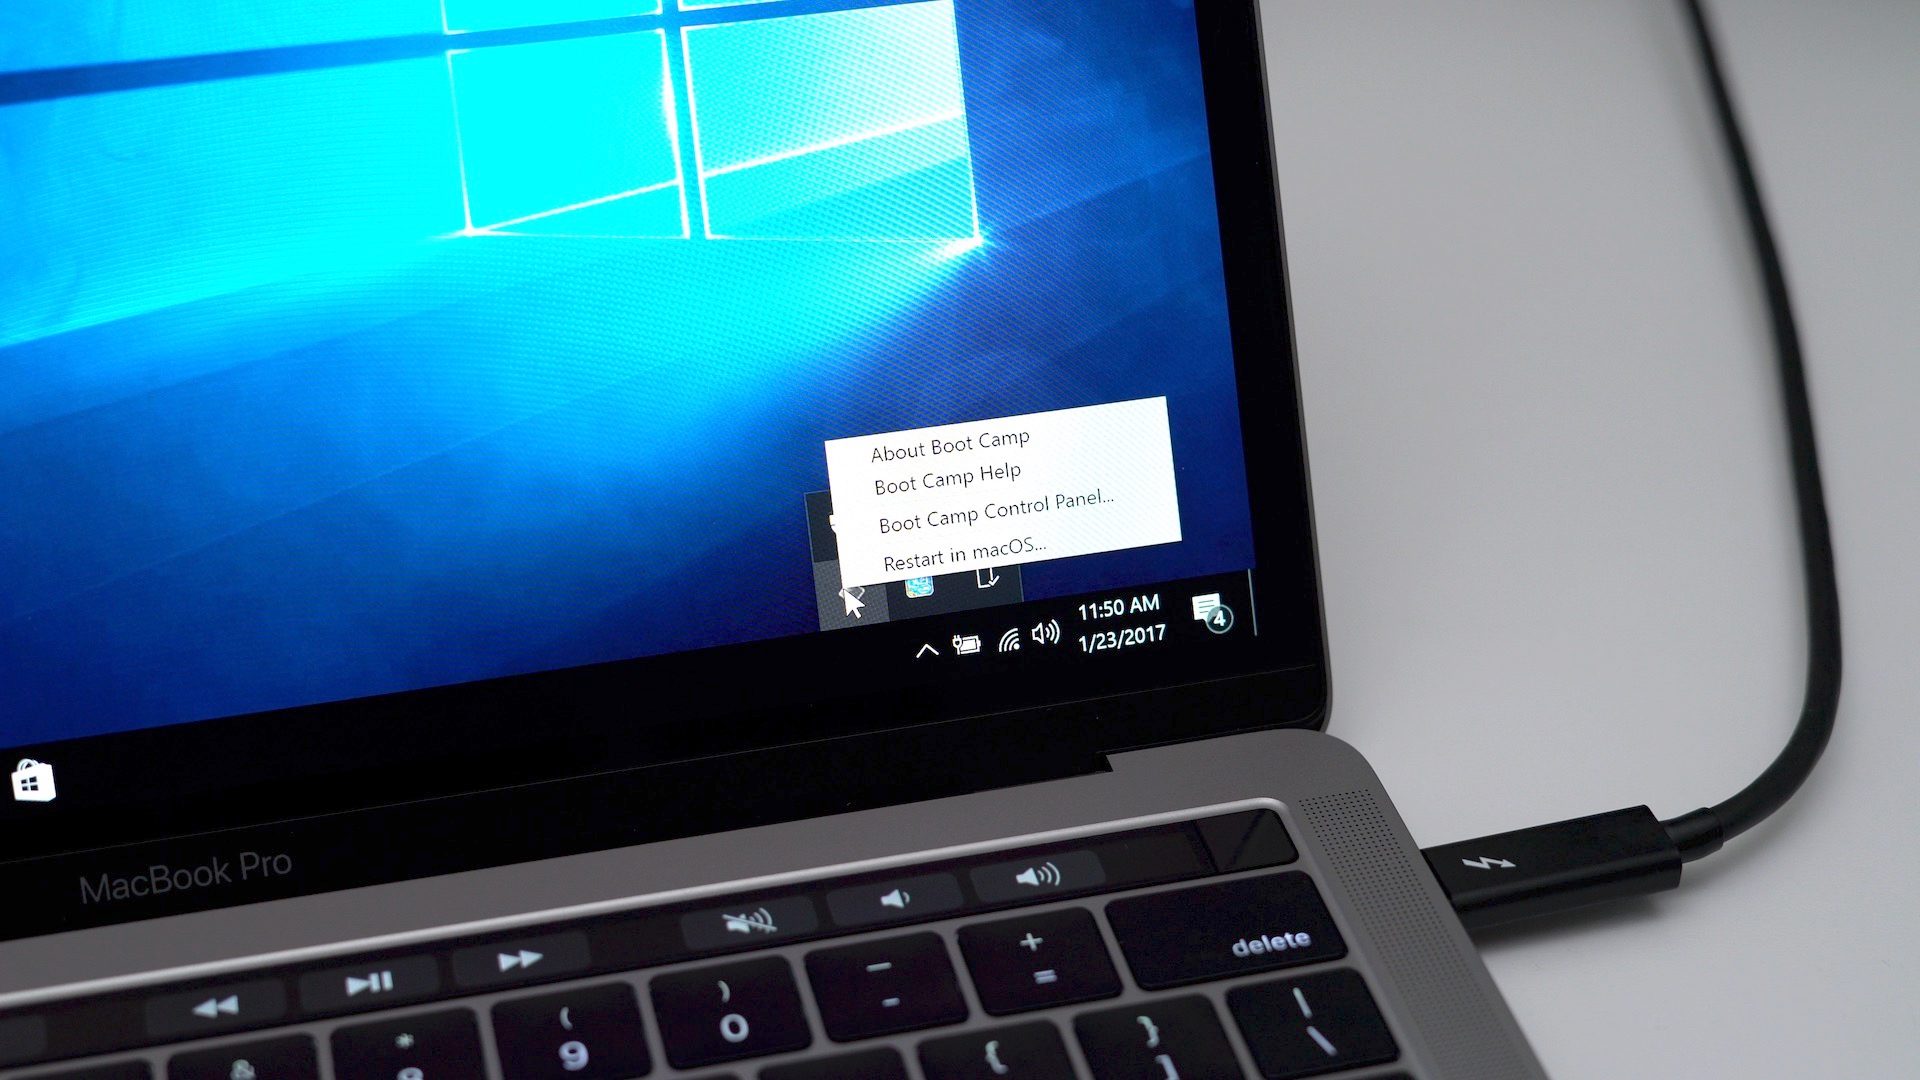 Installing windows 10 on macbook pro 2012